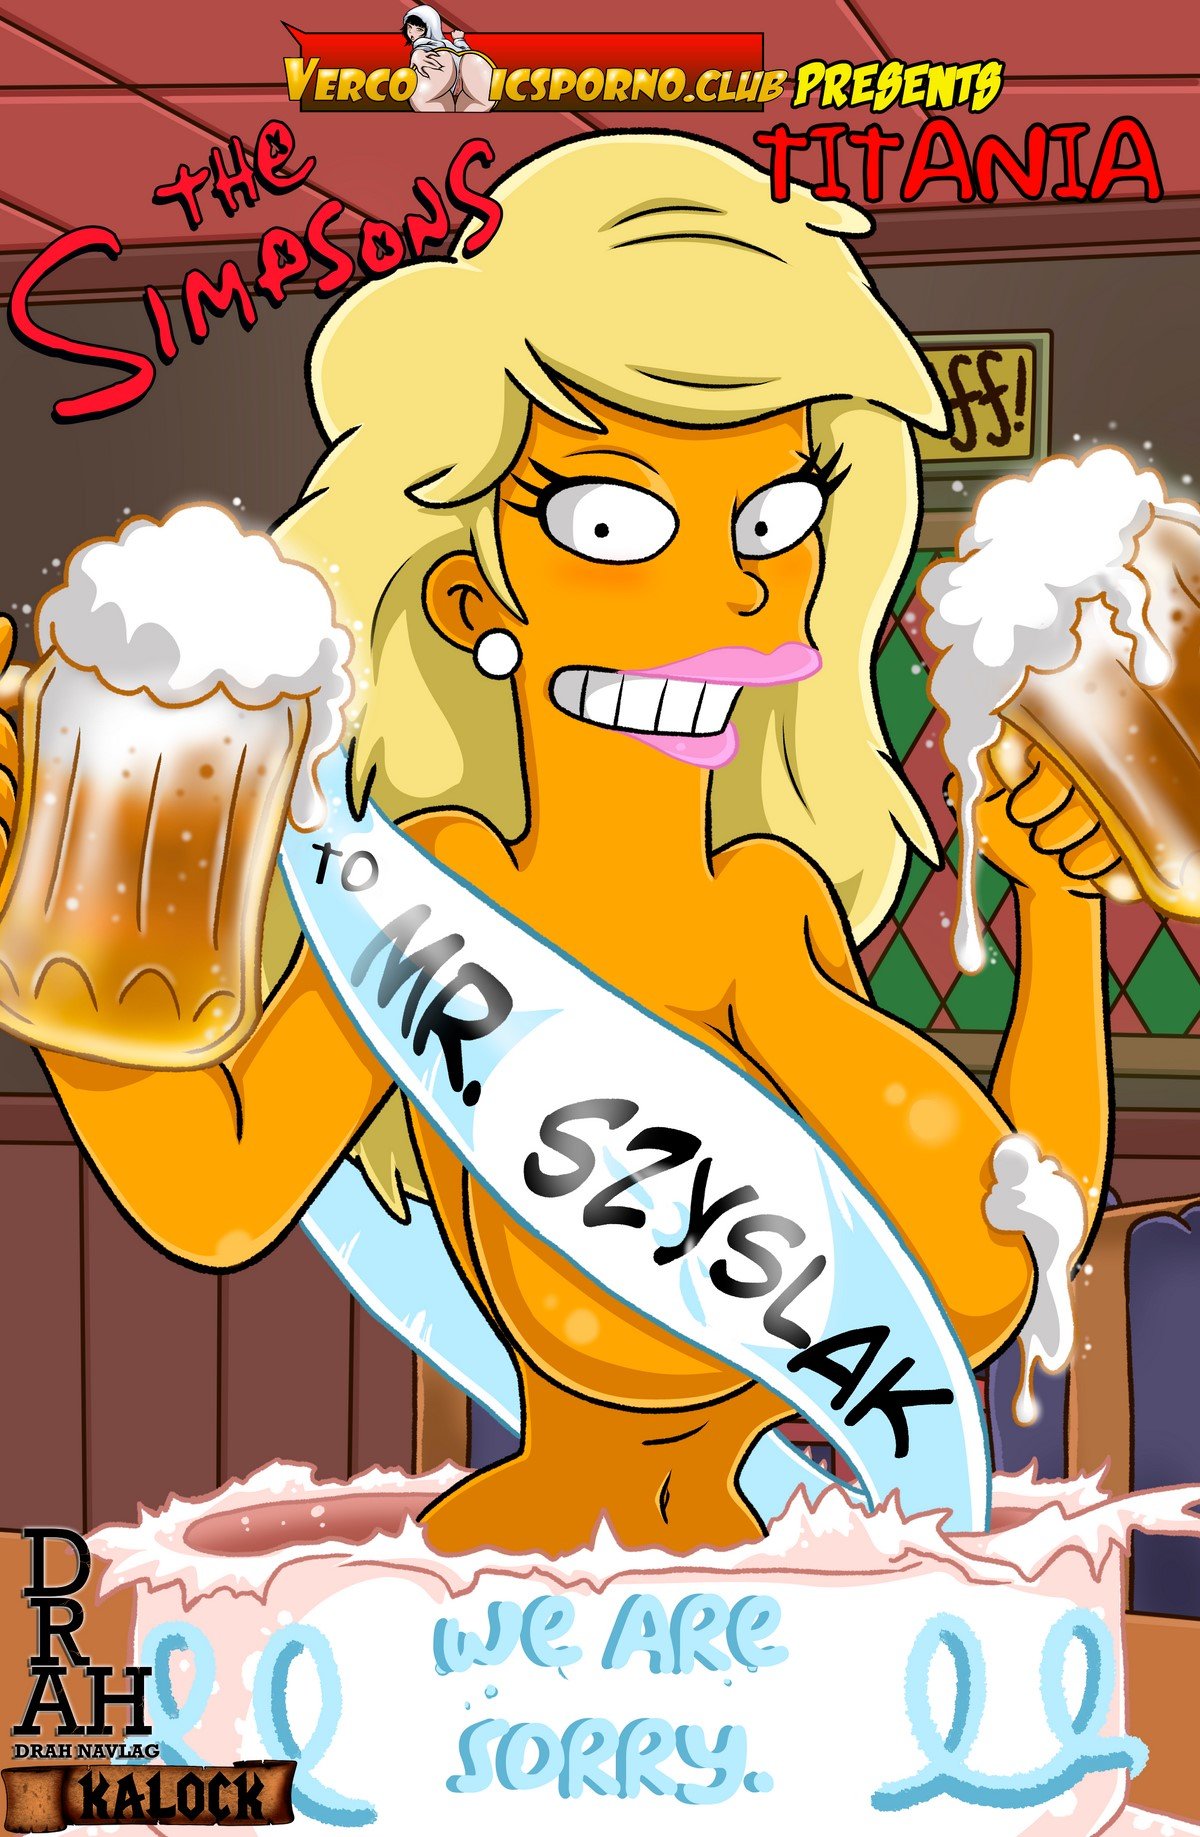 SureFap xxx porno The Simpsons - [VerComicsPorno (VCP)][Drah Navlag] - Titania